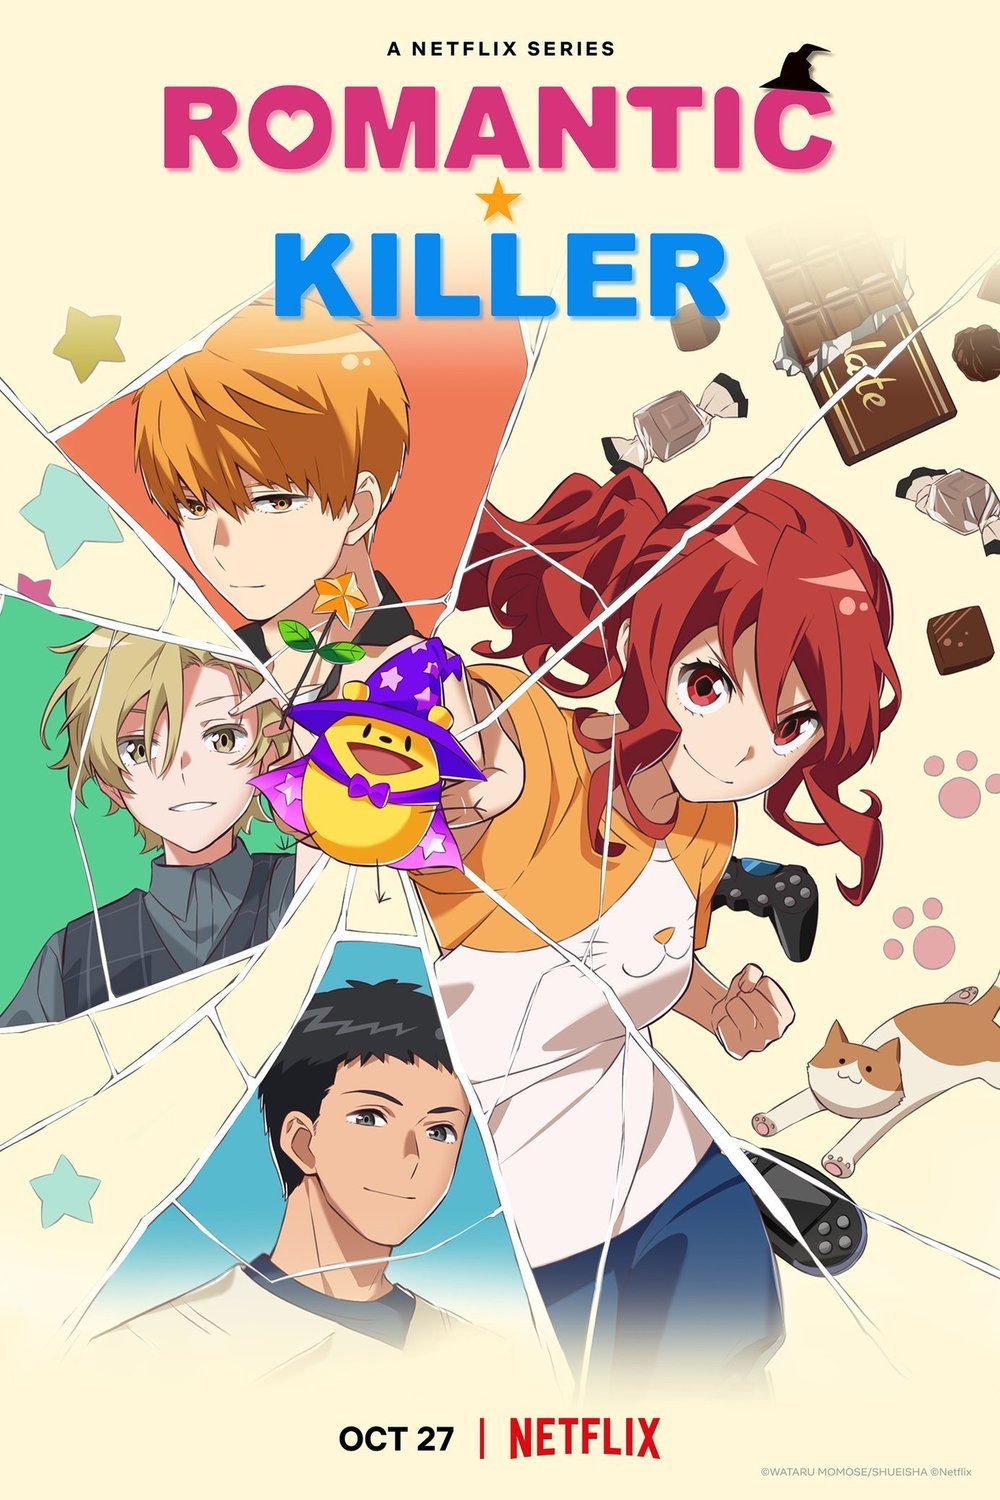 Japanese poster of the movie Romantic Killer